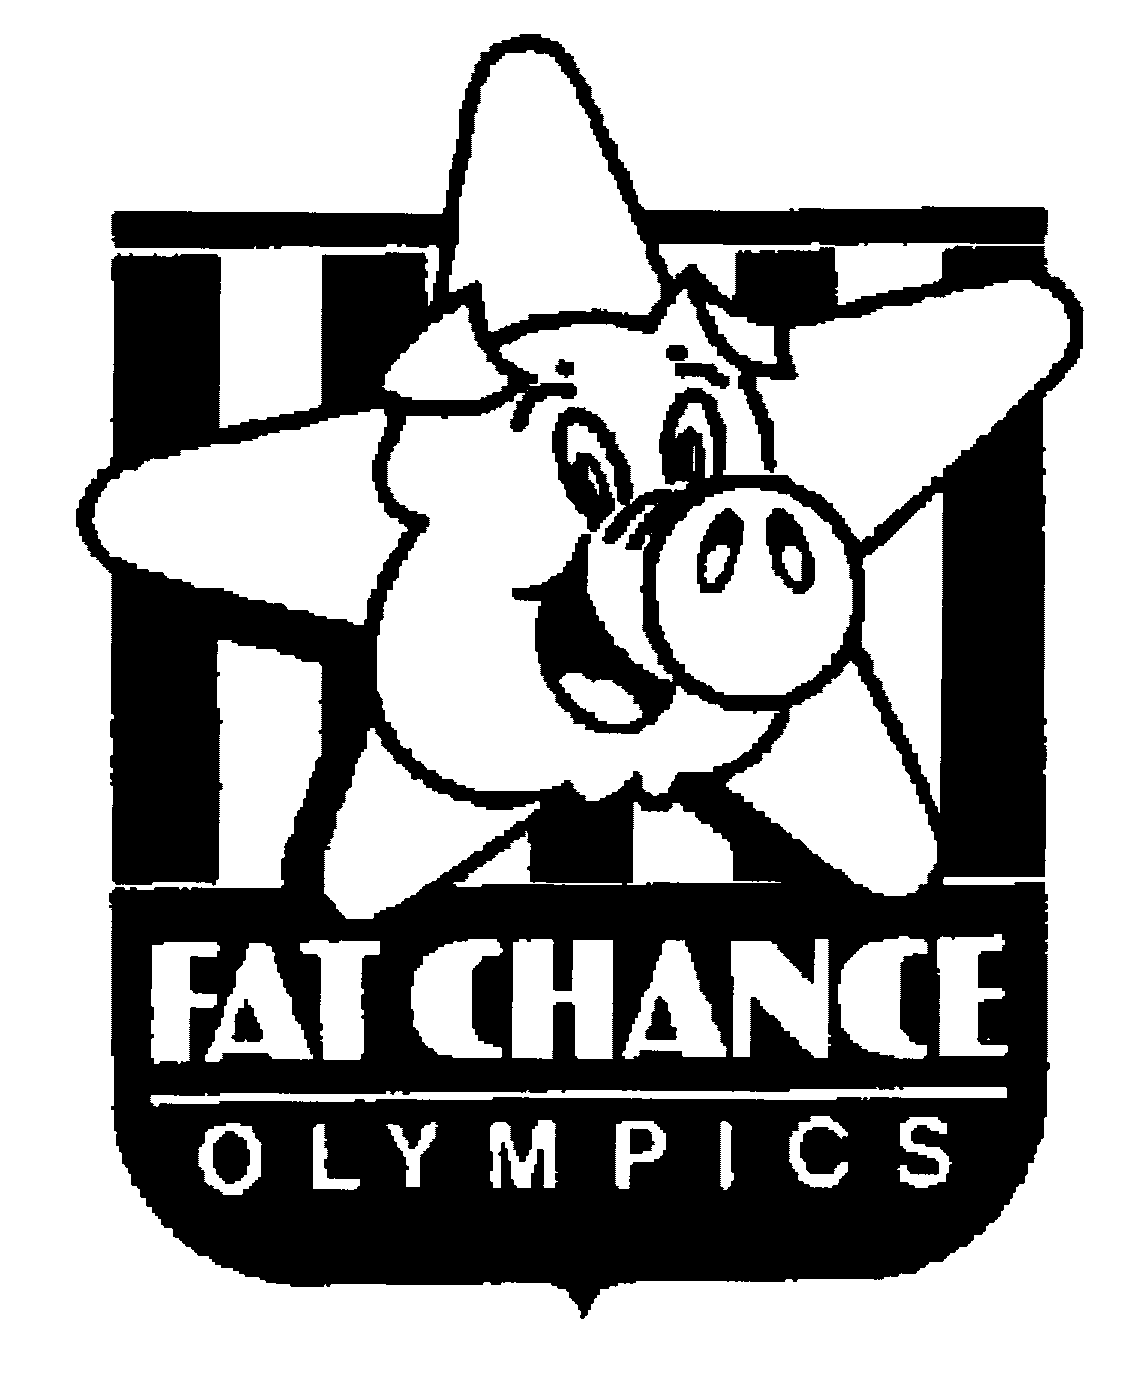  FAT CHANCE OLYMPICS